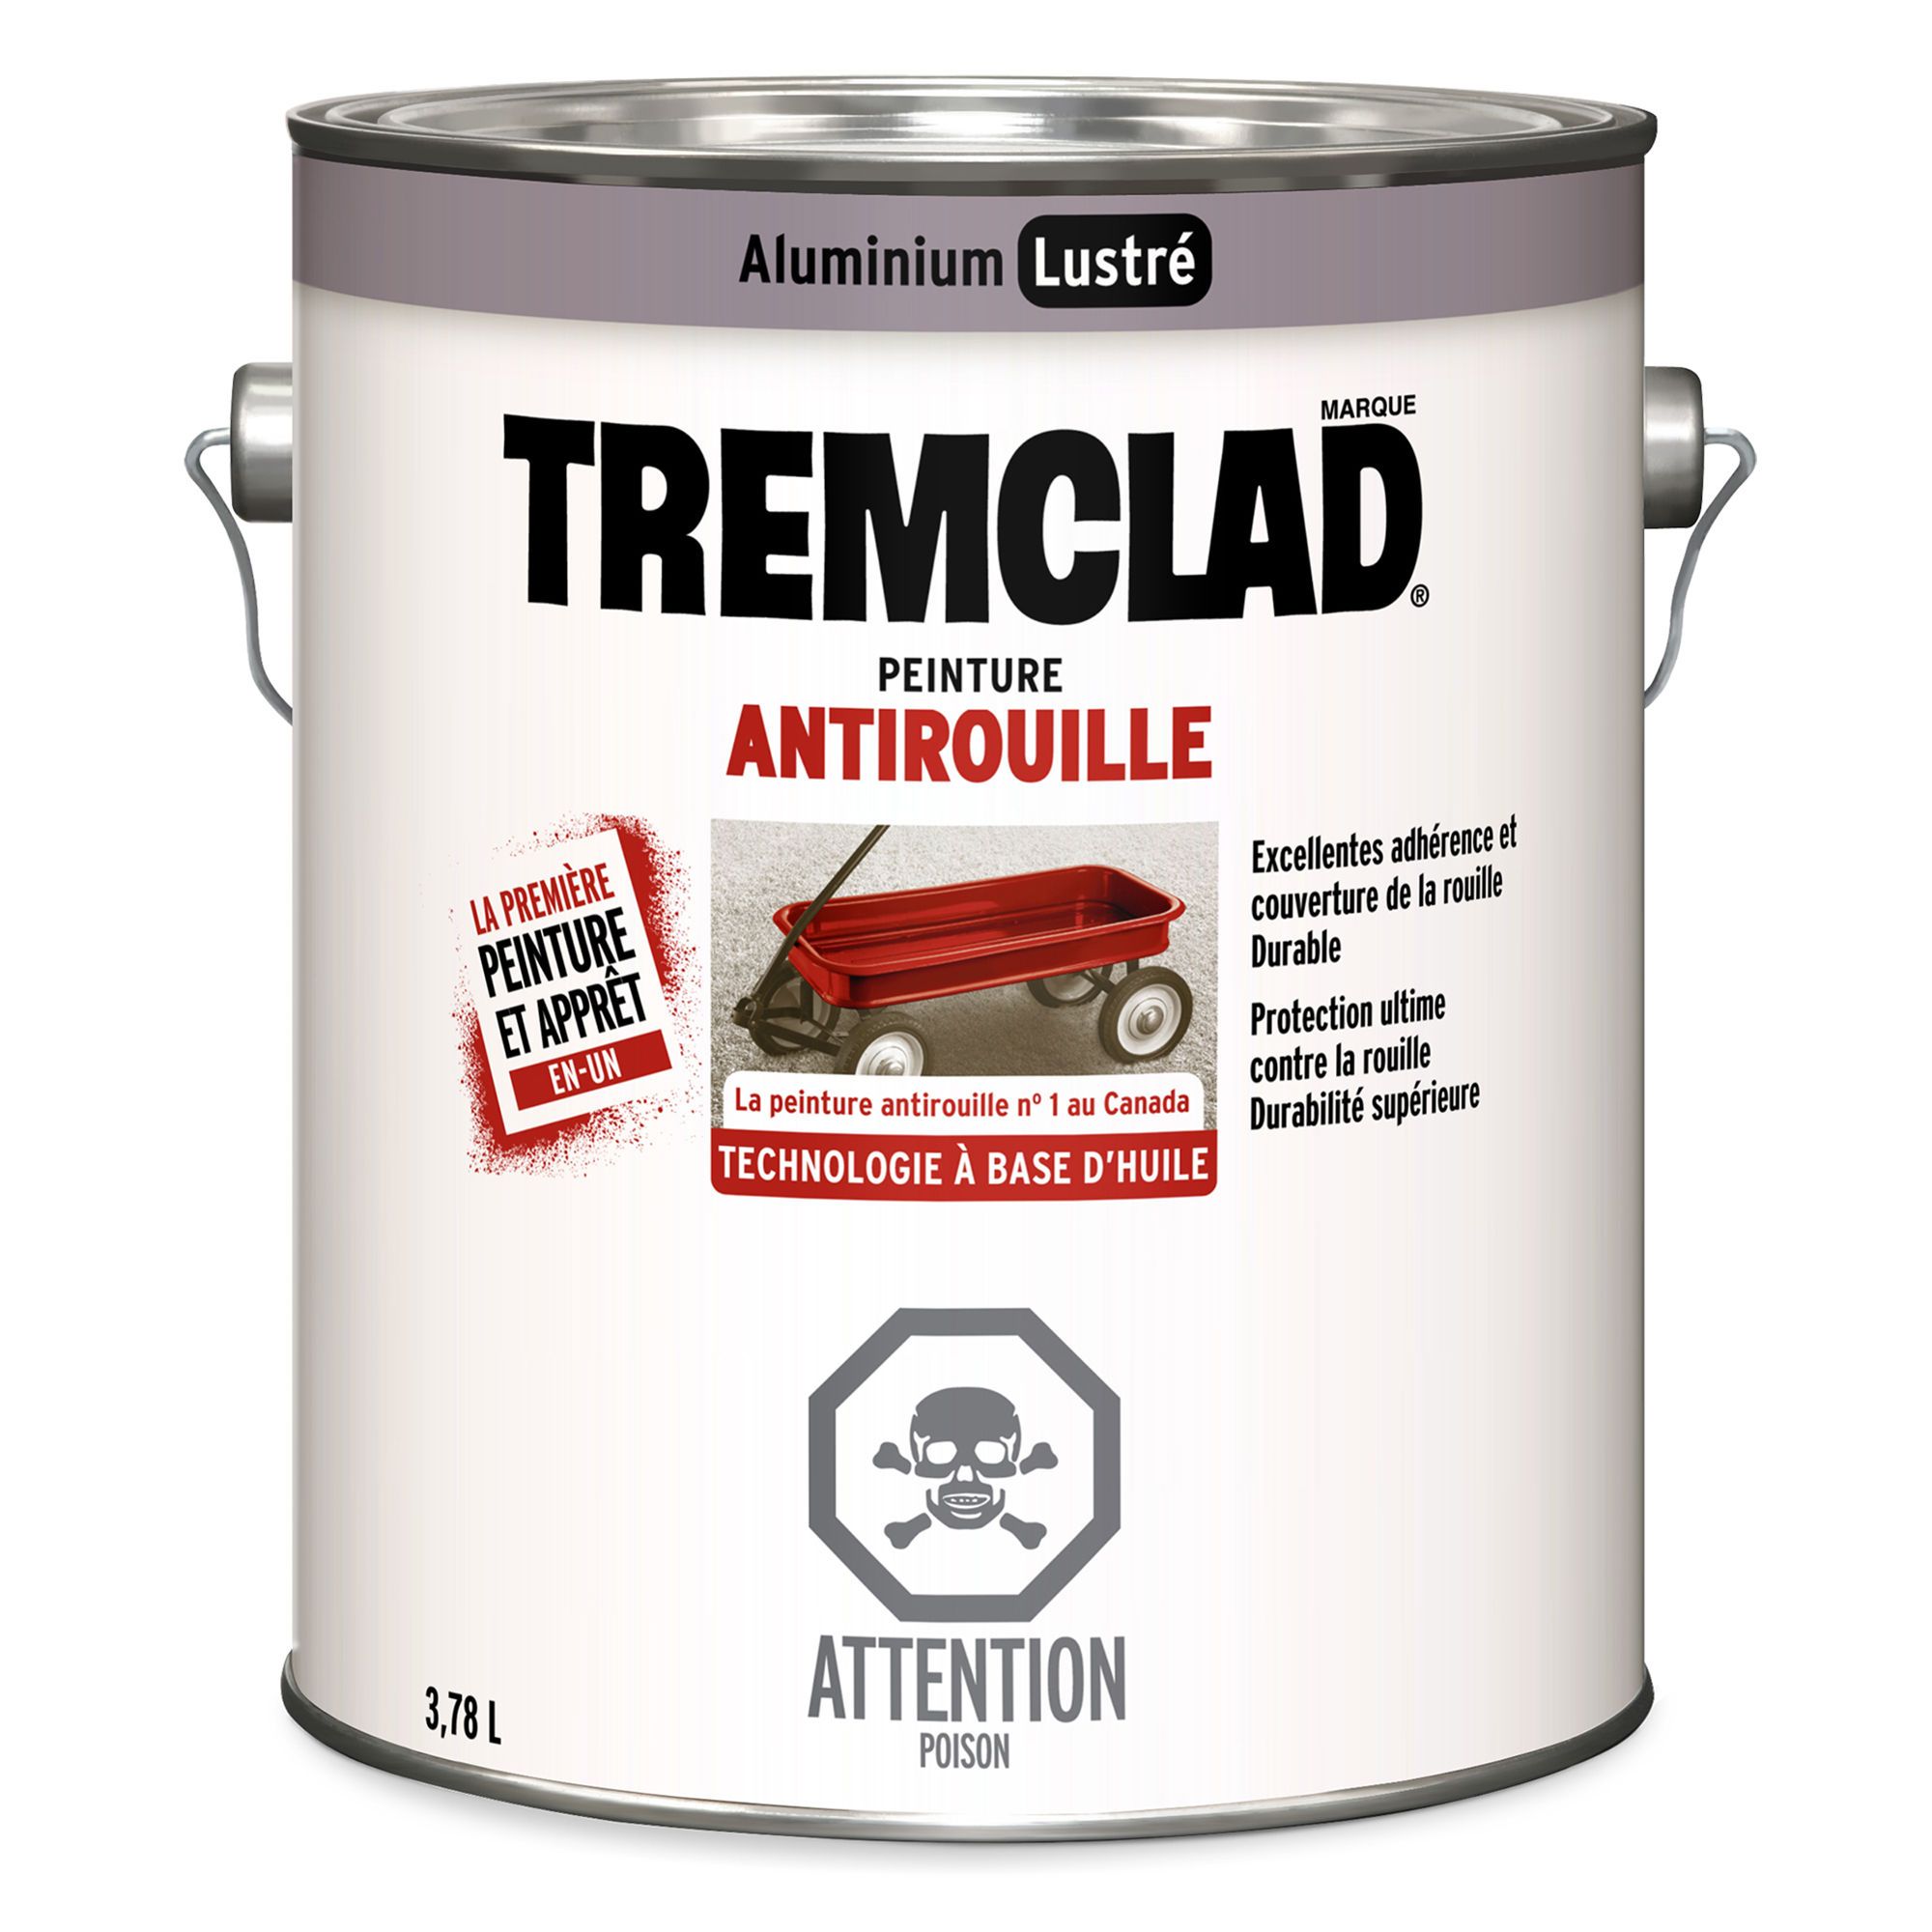 Peinture antirouille à base d'huile Tremclad, fini lustré, aluminium, 3,78  l de RUST-OLEUM